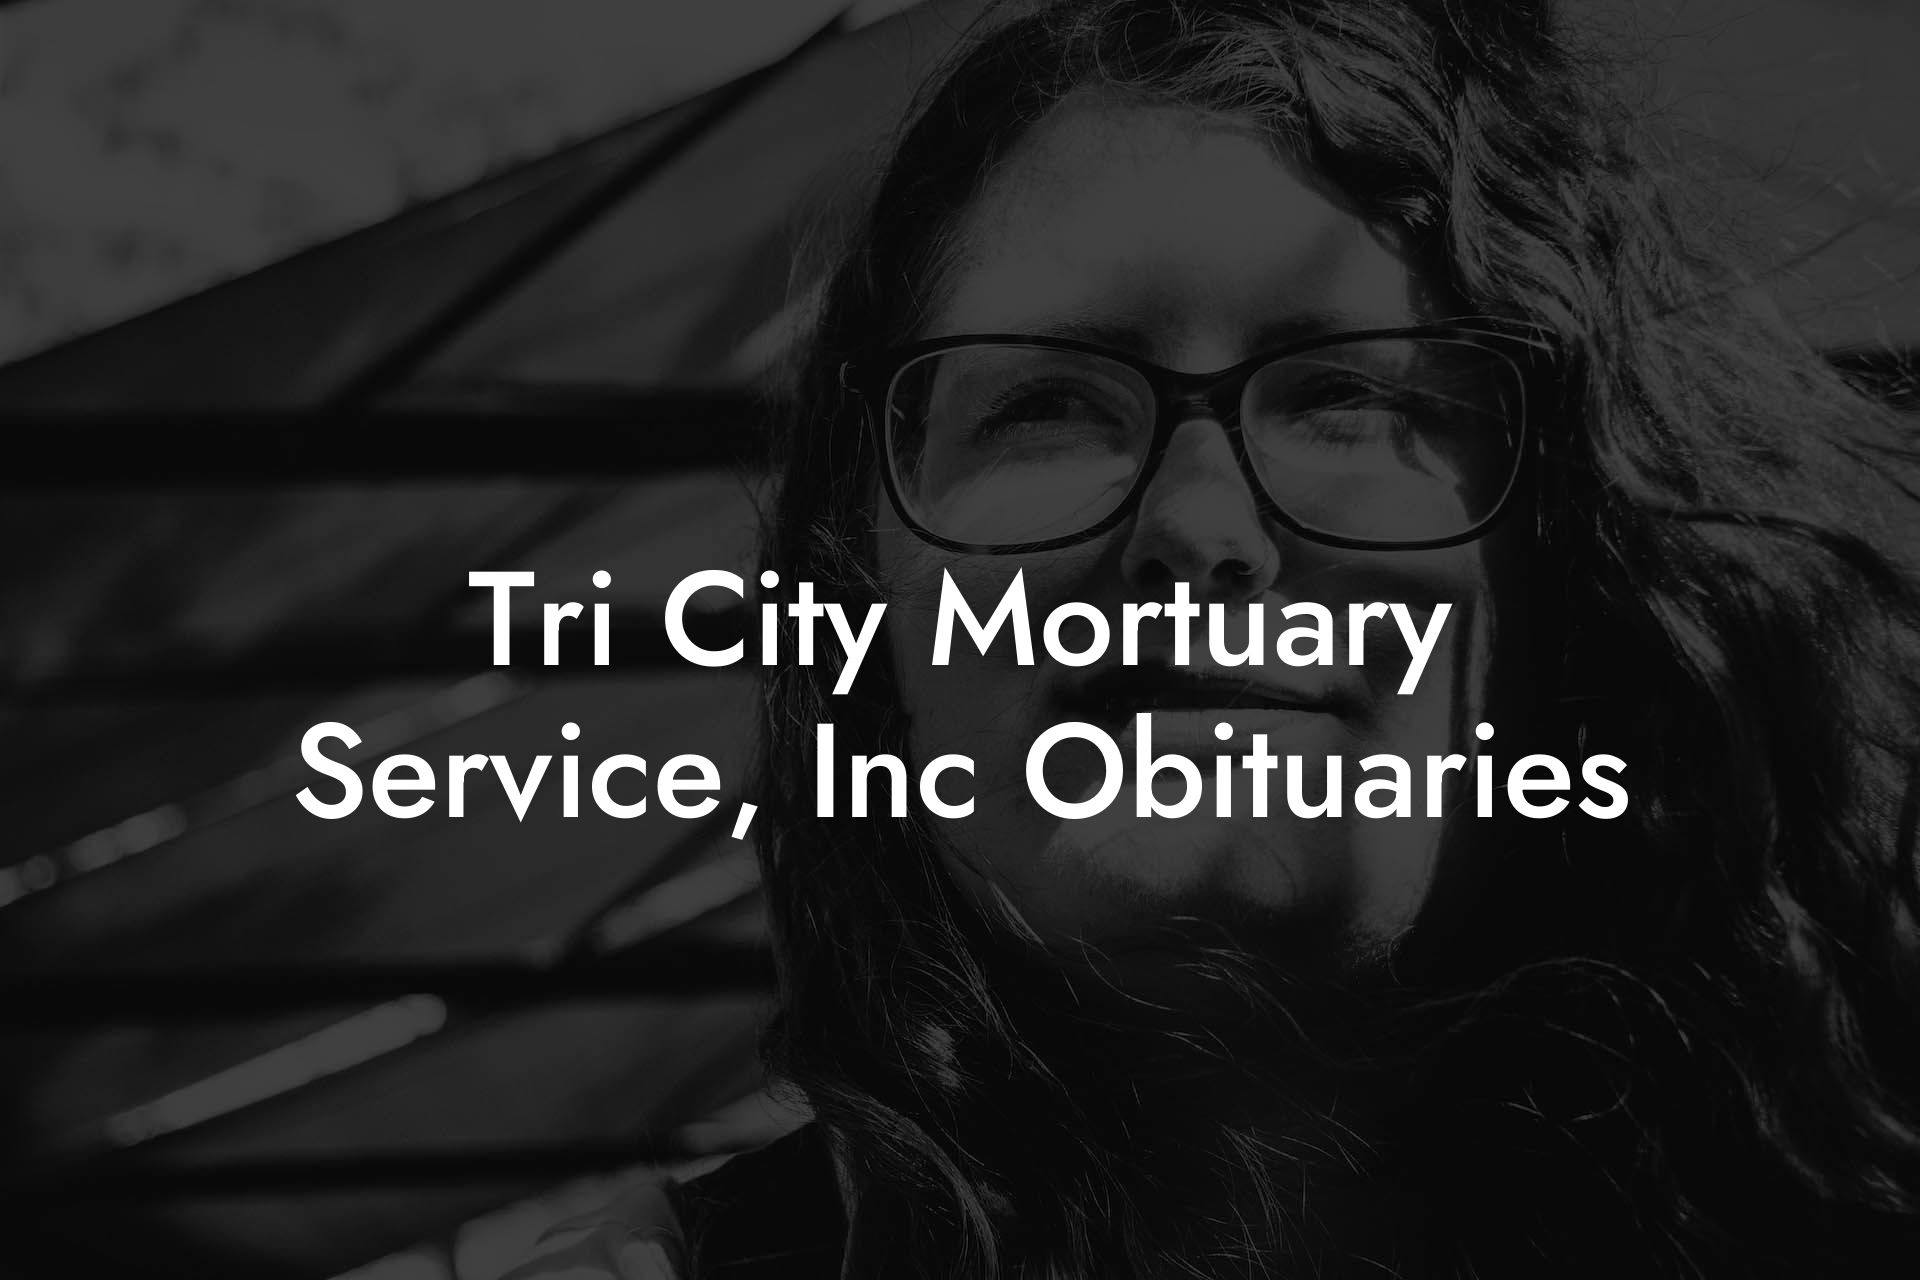 Tri City Mortuary Service, Inc Obituaries